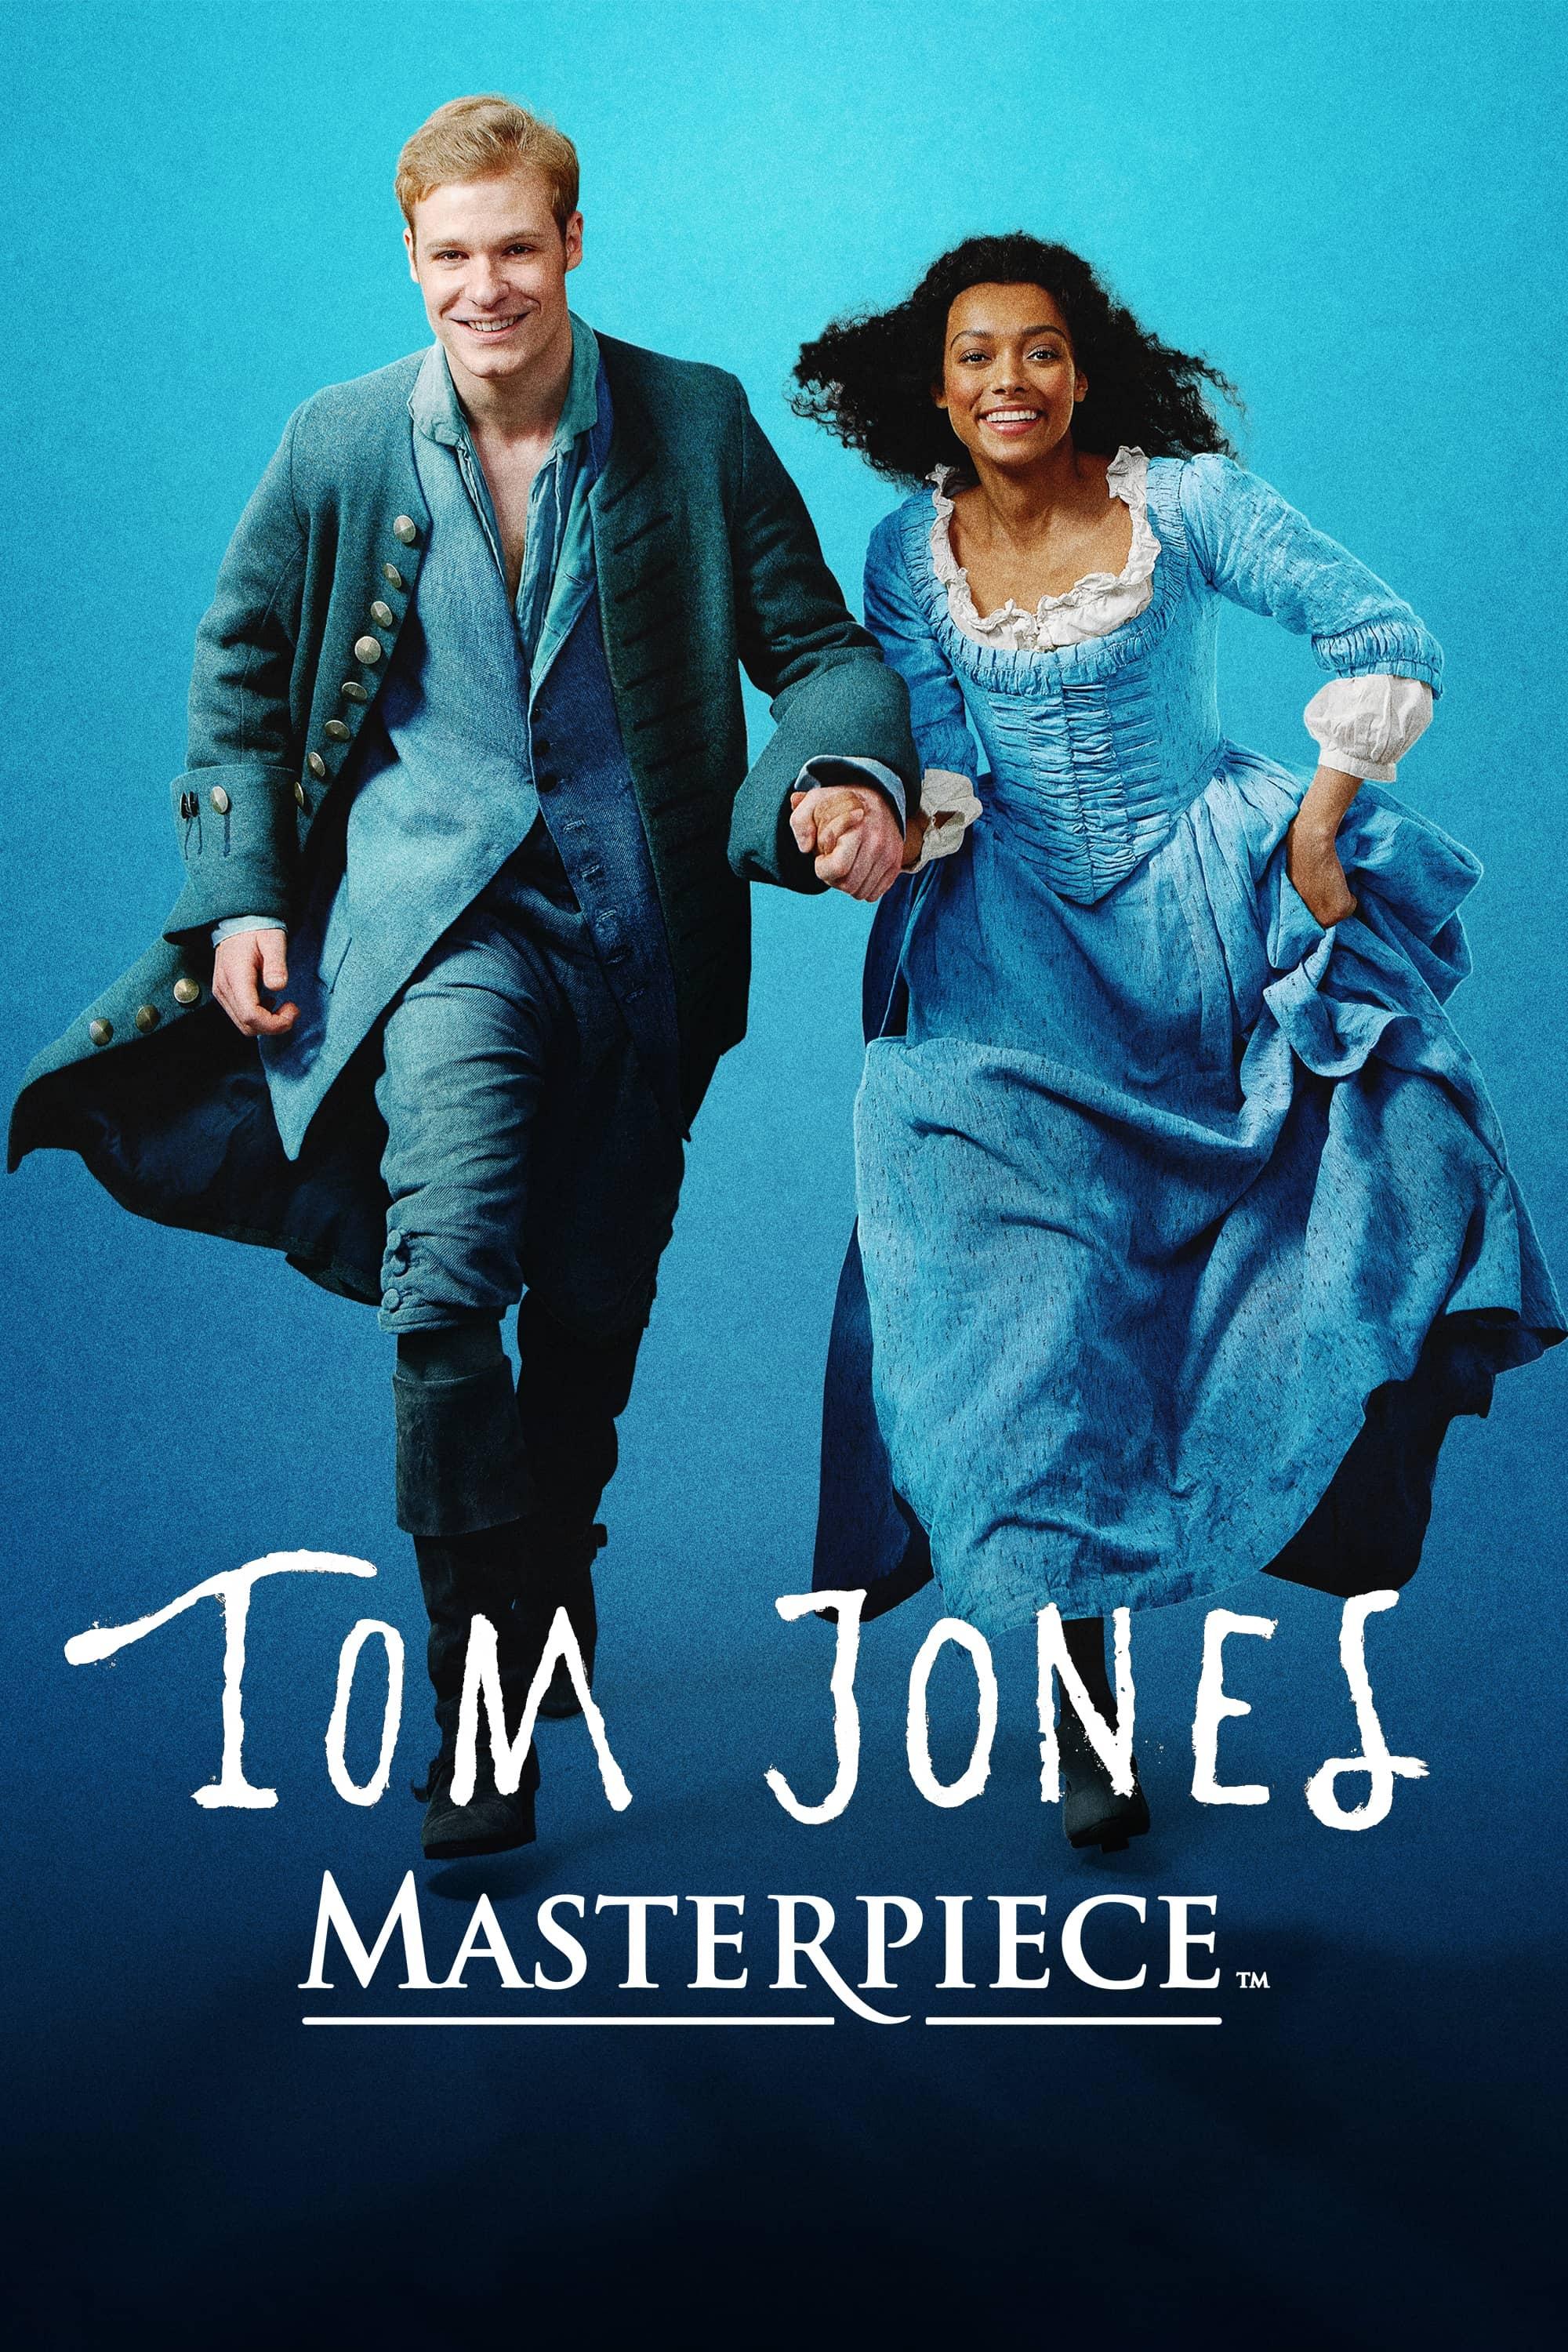 Tom Jones on Masterpiece